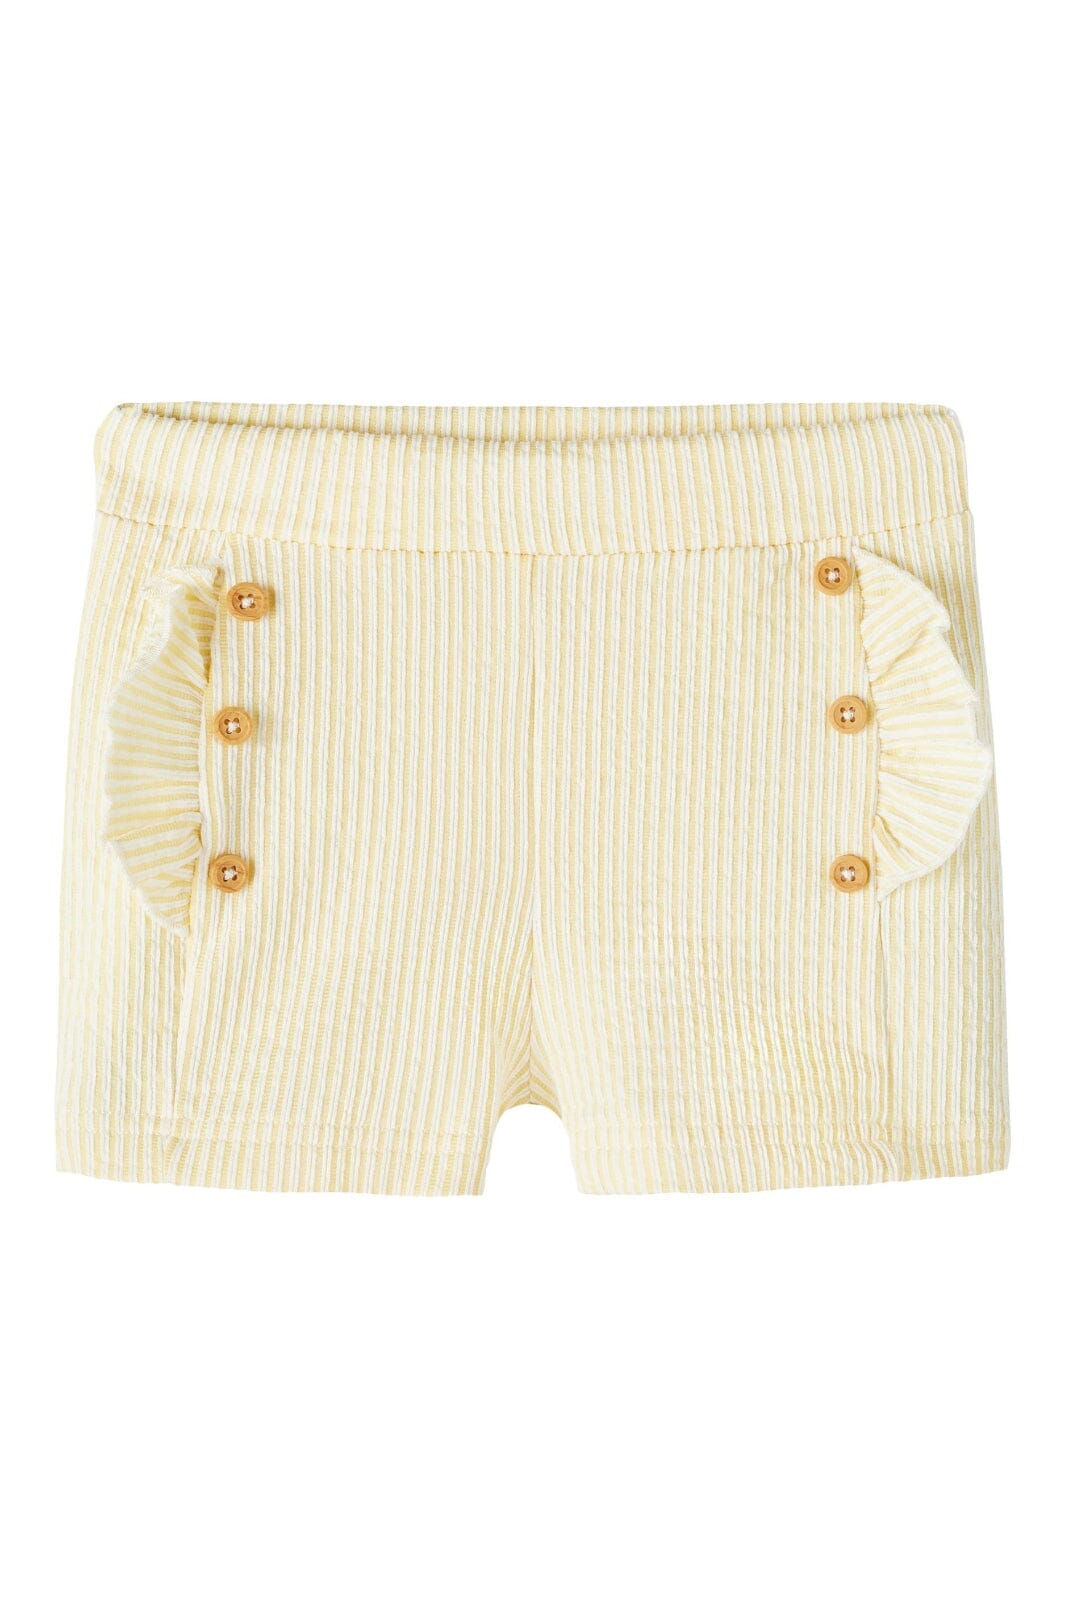 Name it - Nmffreja Shorts - Pineapple Slice Shorts 